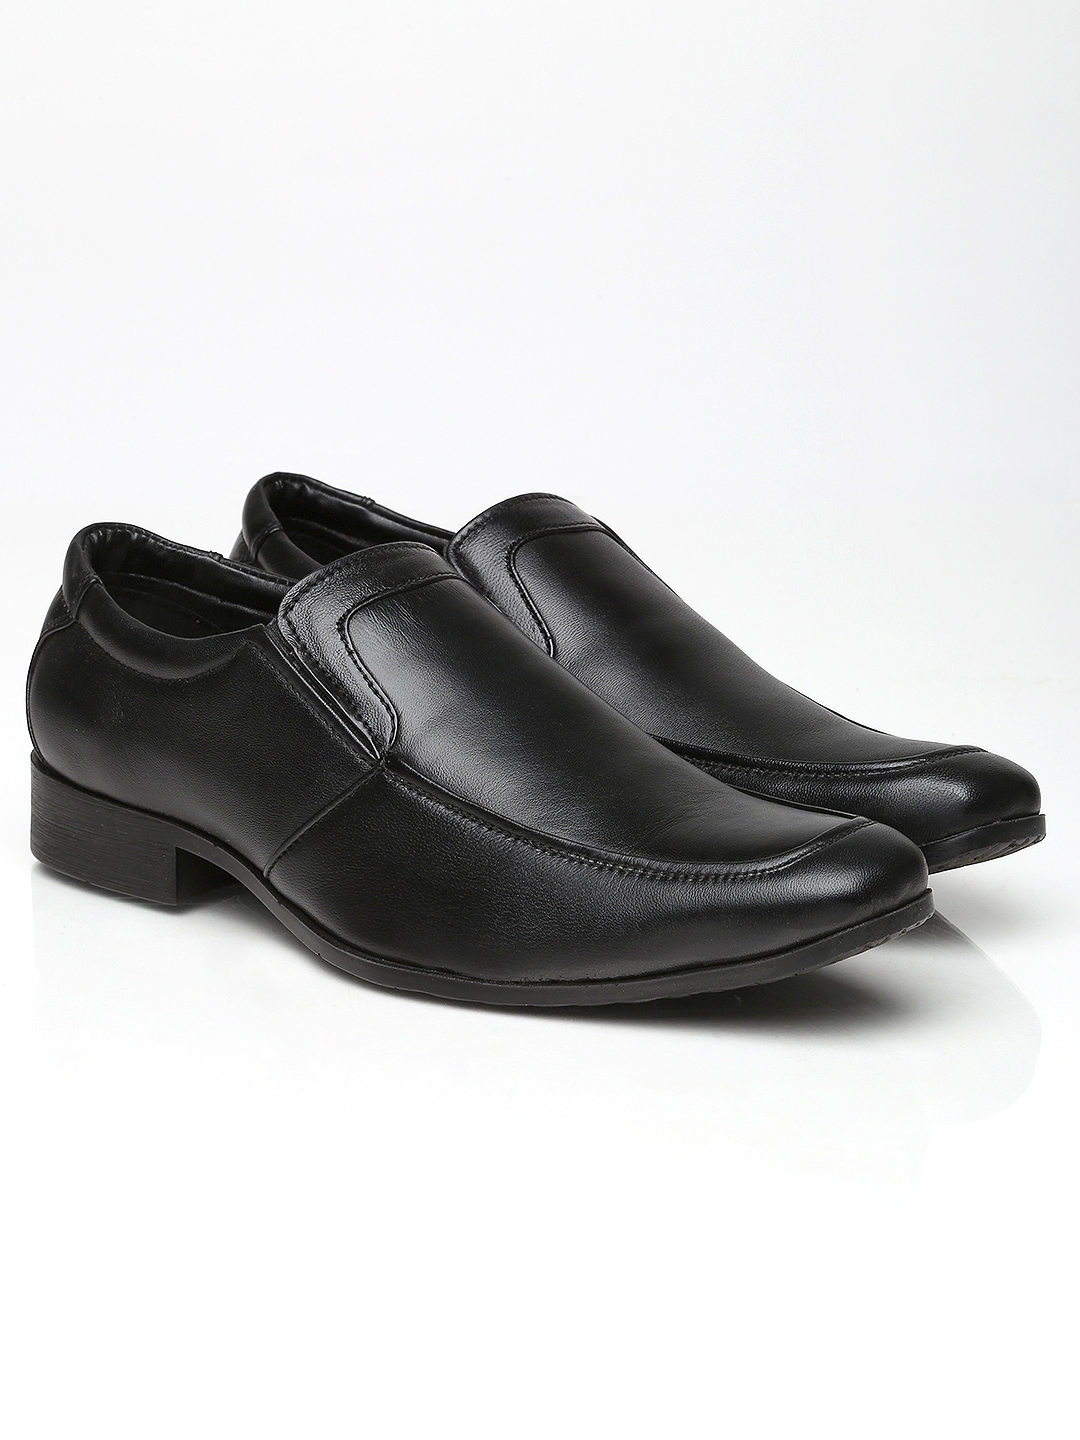 mancini formal shoes